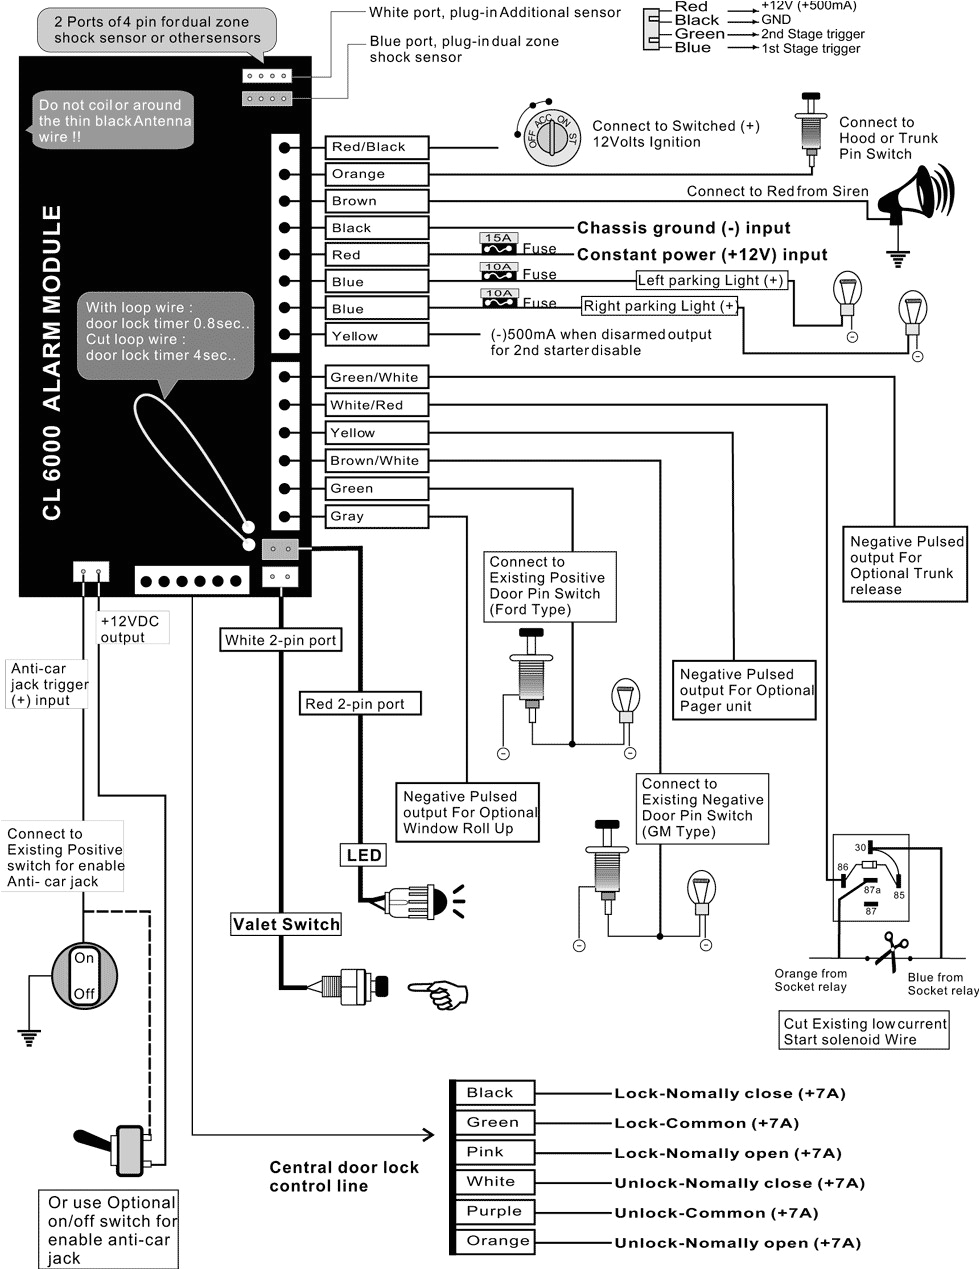 audiovox alarm wiring wiring diagram expert alarm wiring guide